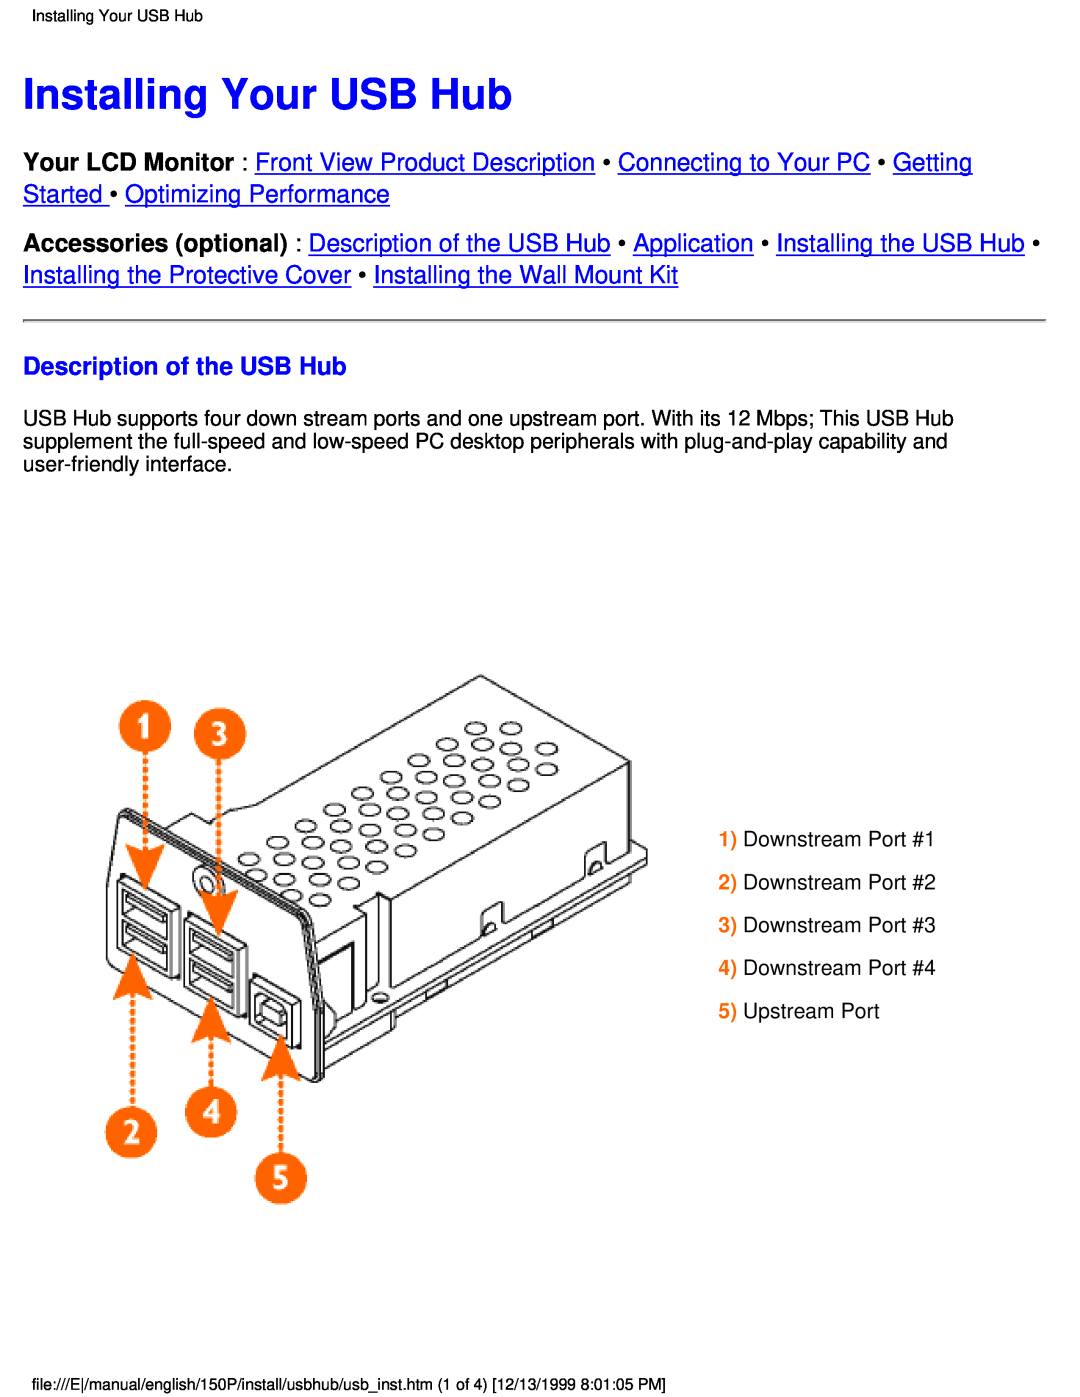 Philips 150P user manual Installing Your USB Hub, Description of the USB Hub 